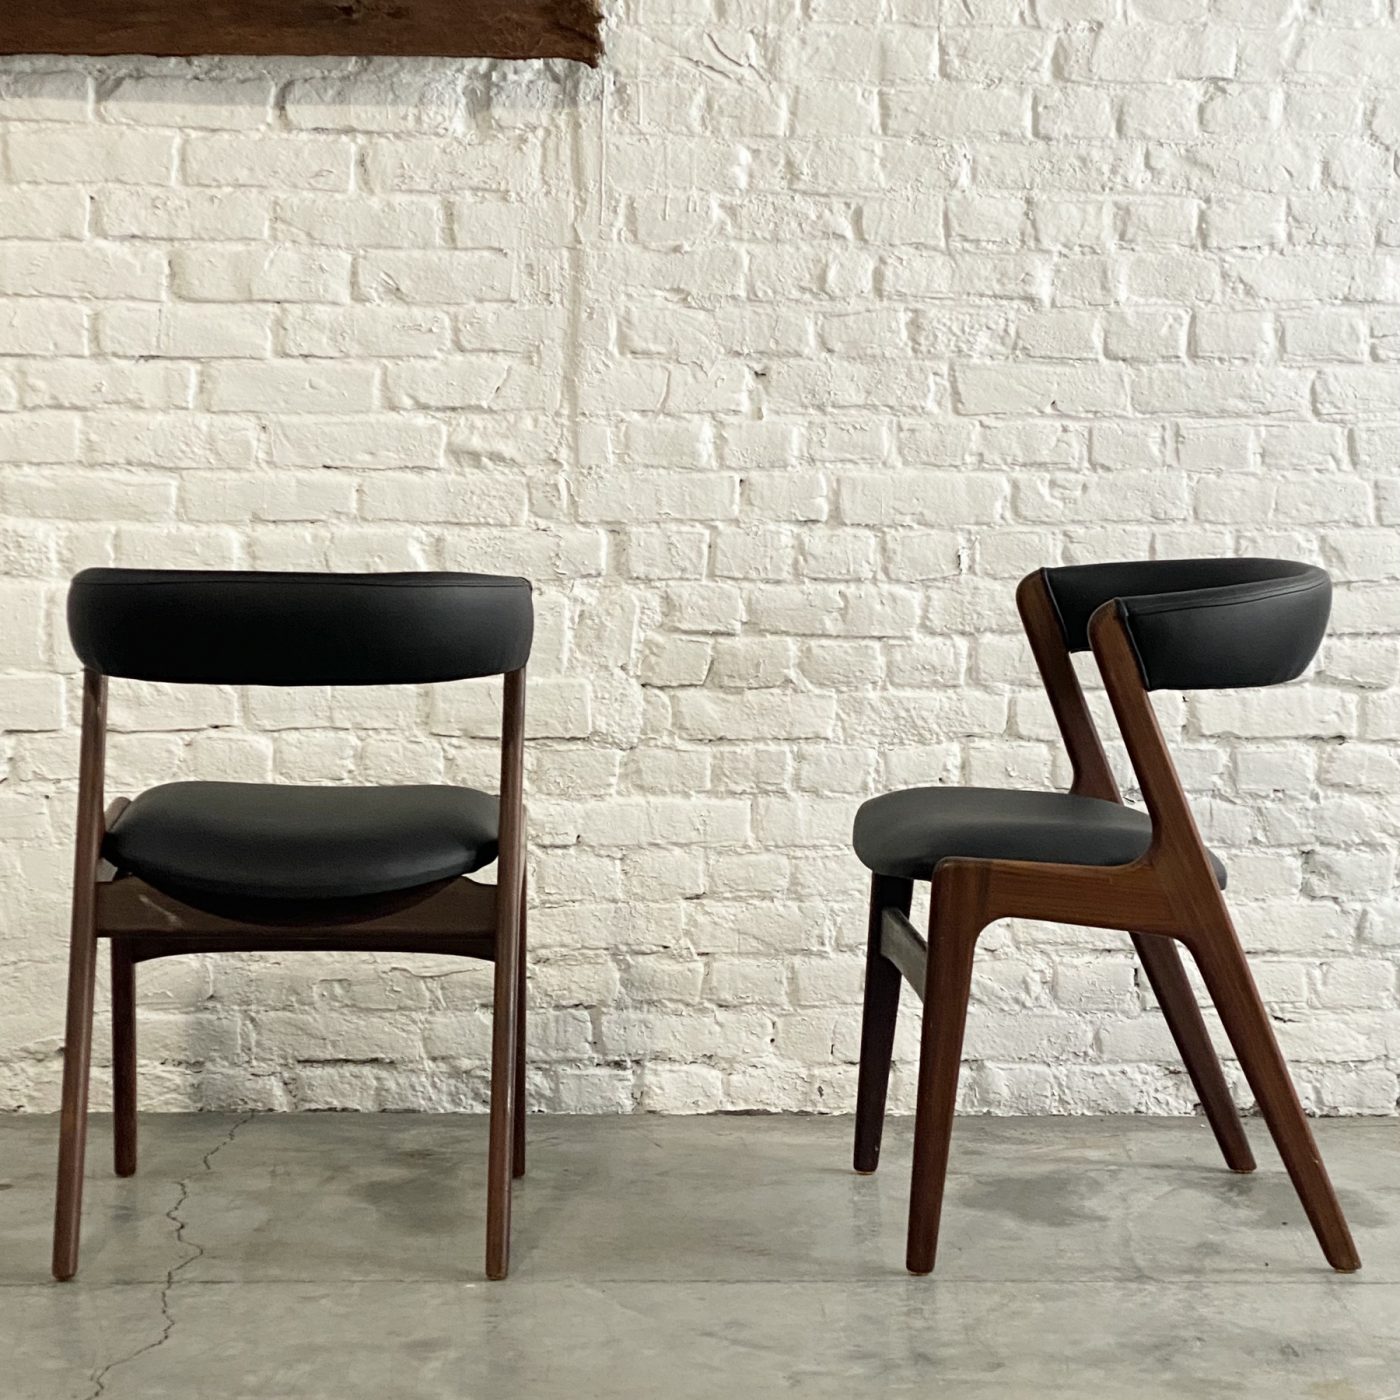 objet-vagabond-danish-chairs0004